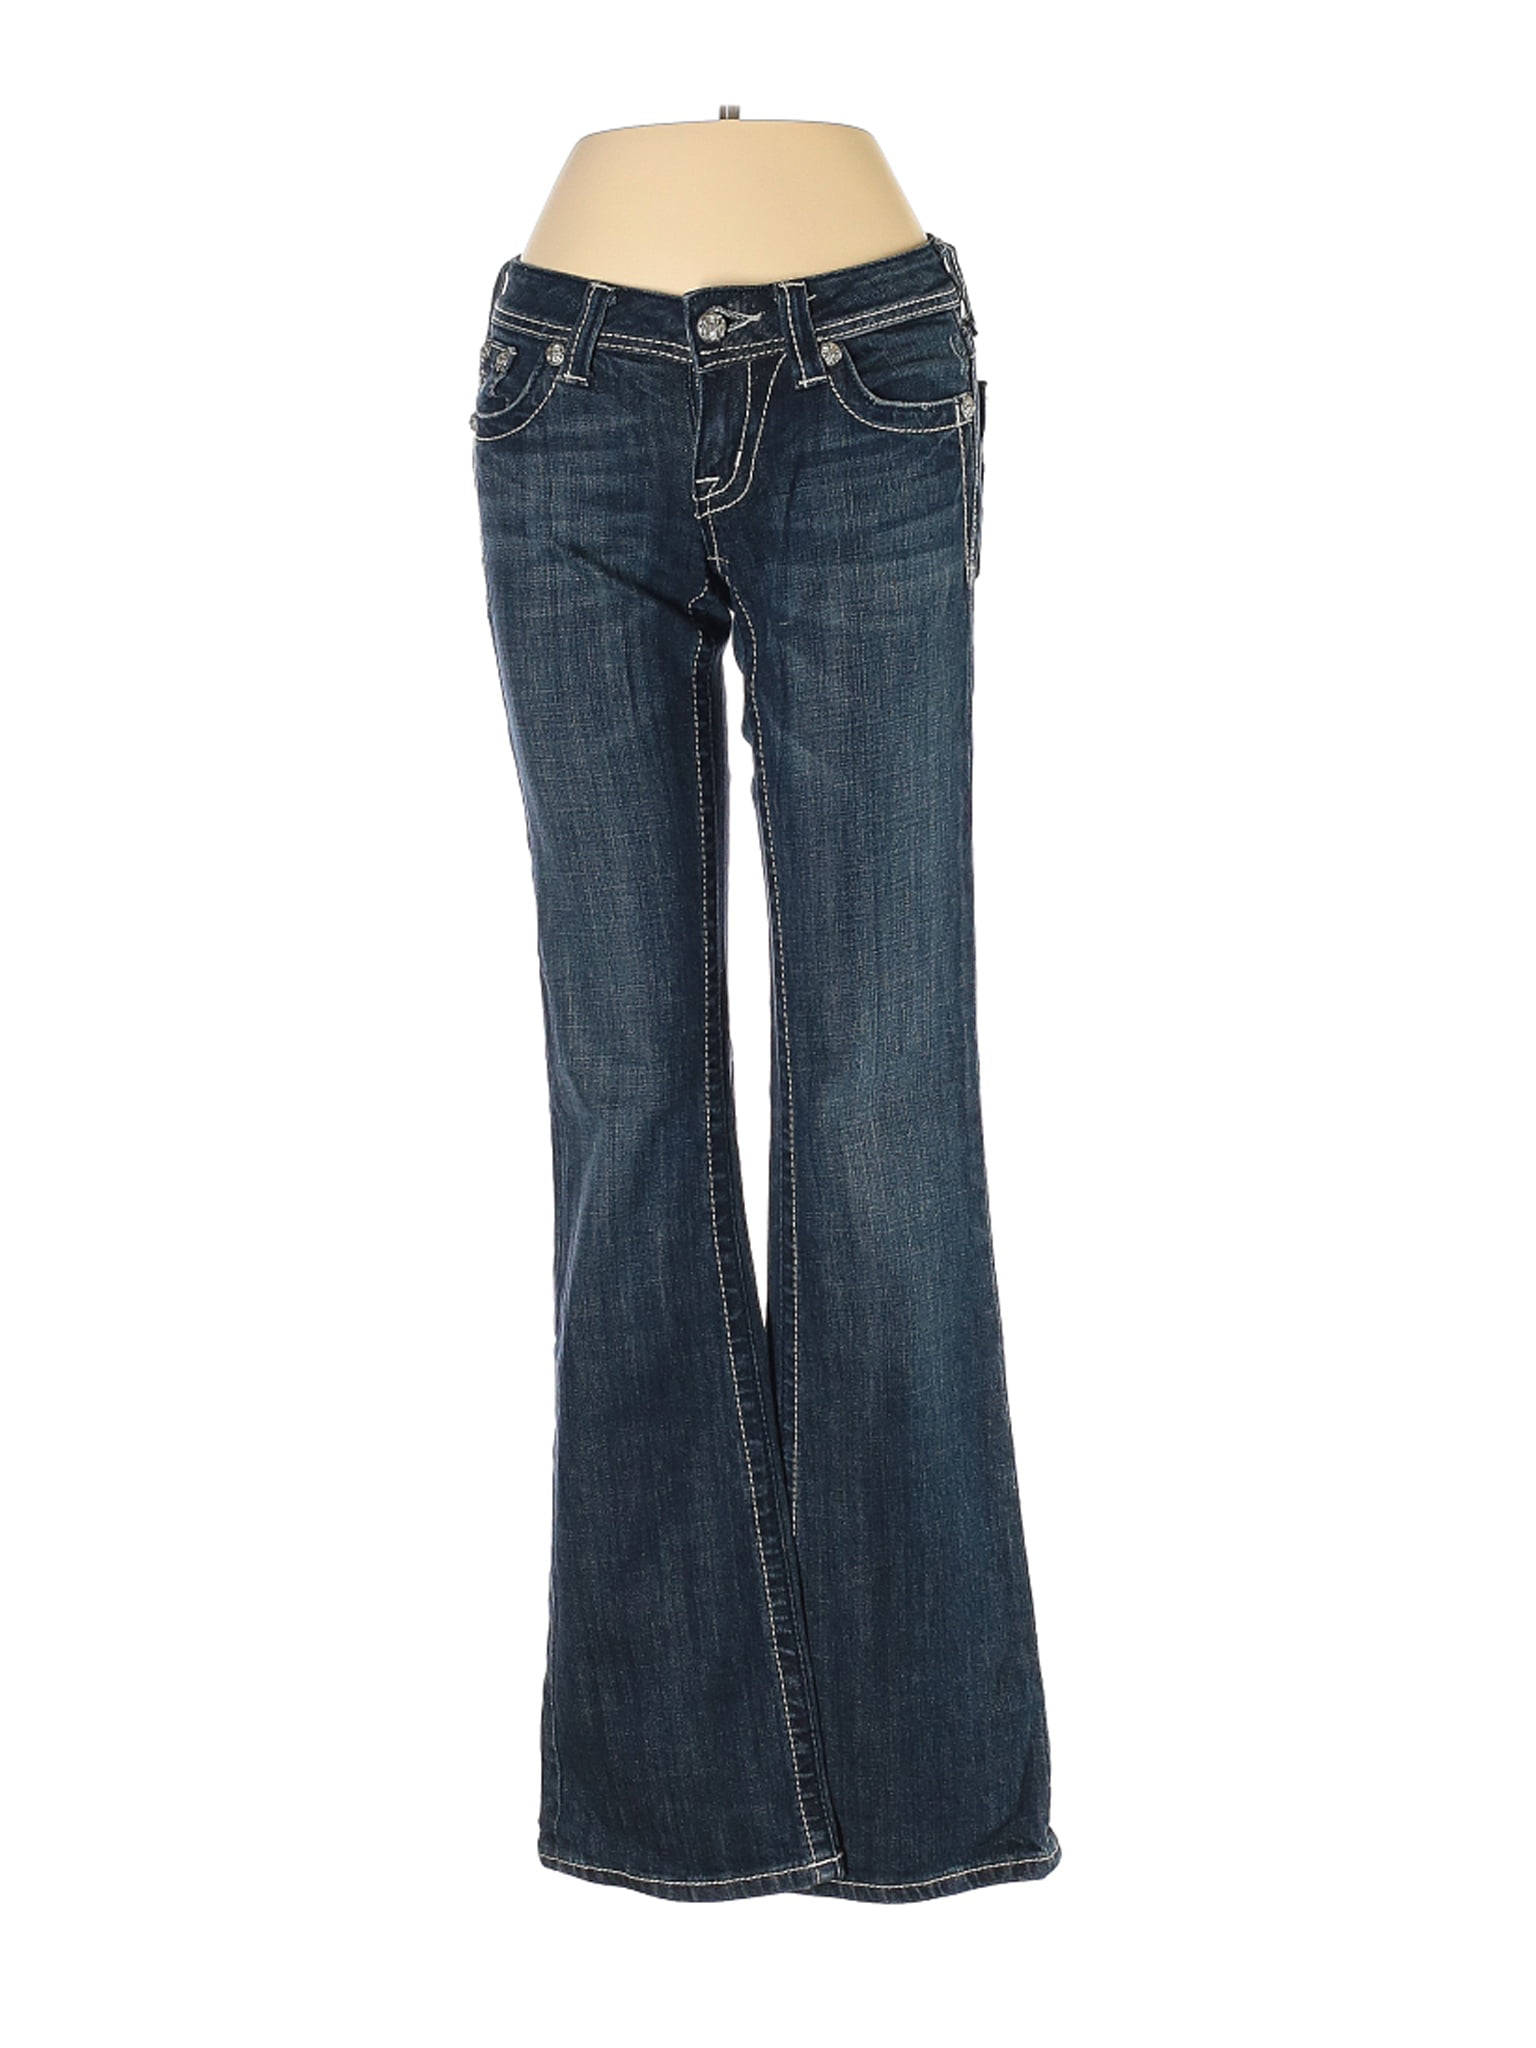 Miss Me - Pre-Owned Miss Me Women's Size 25W Jeans - Walmart.com ...